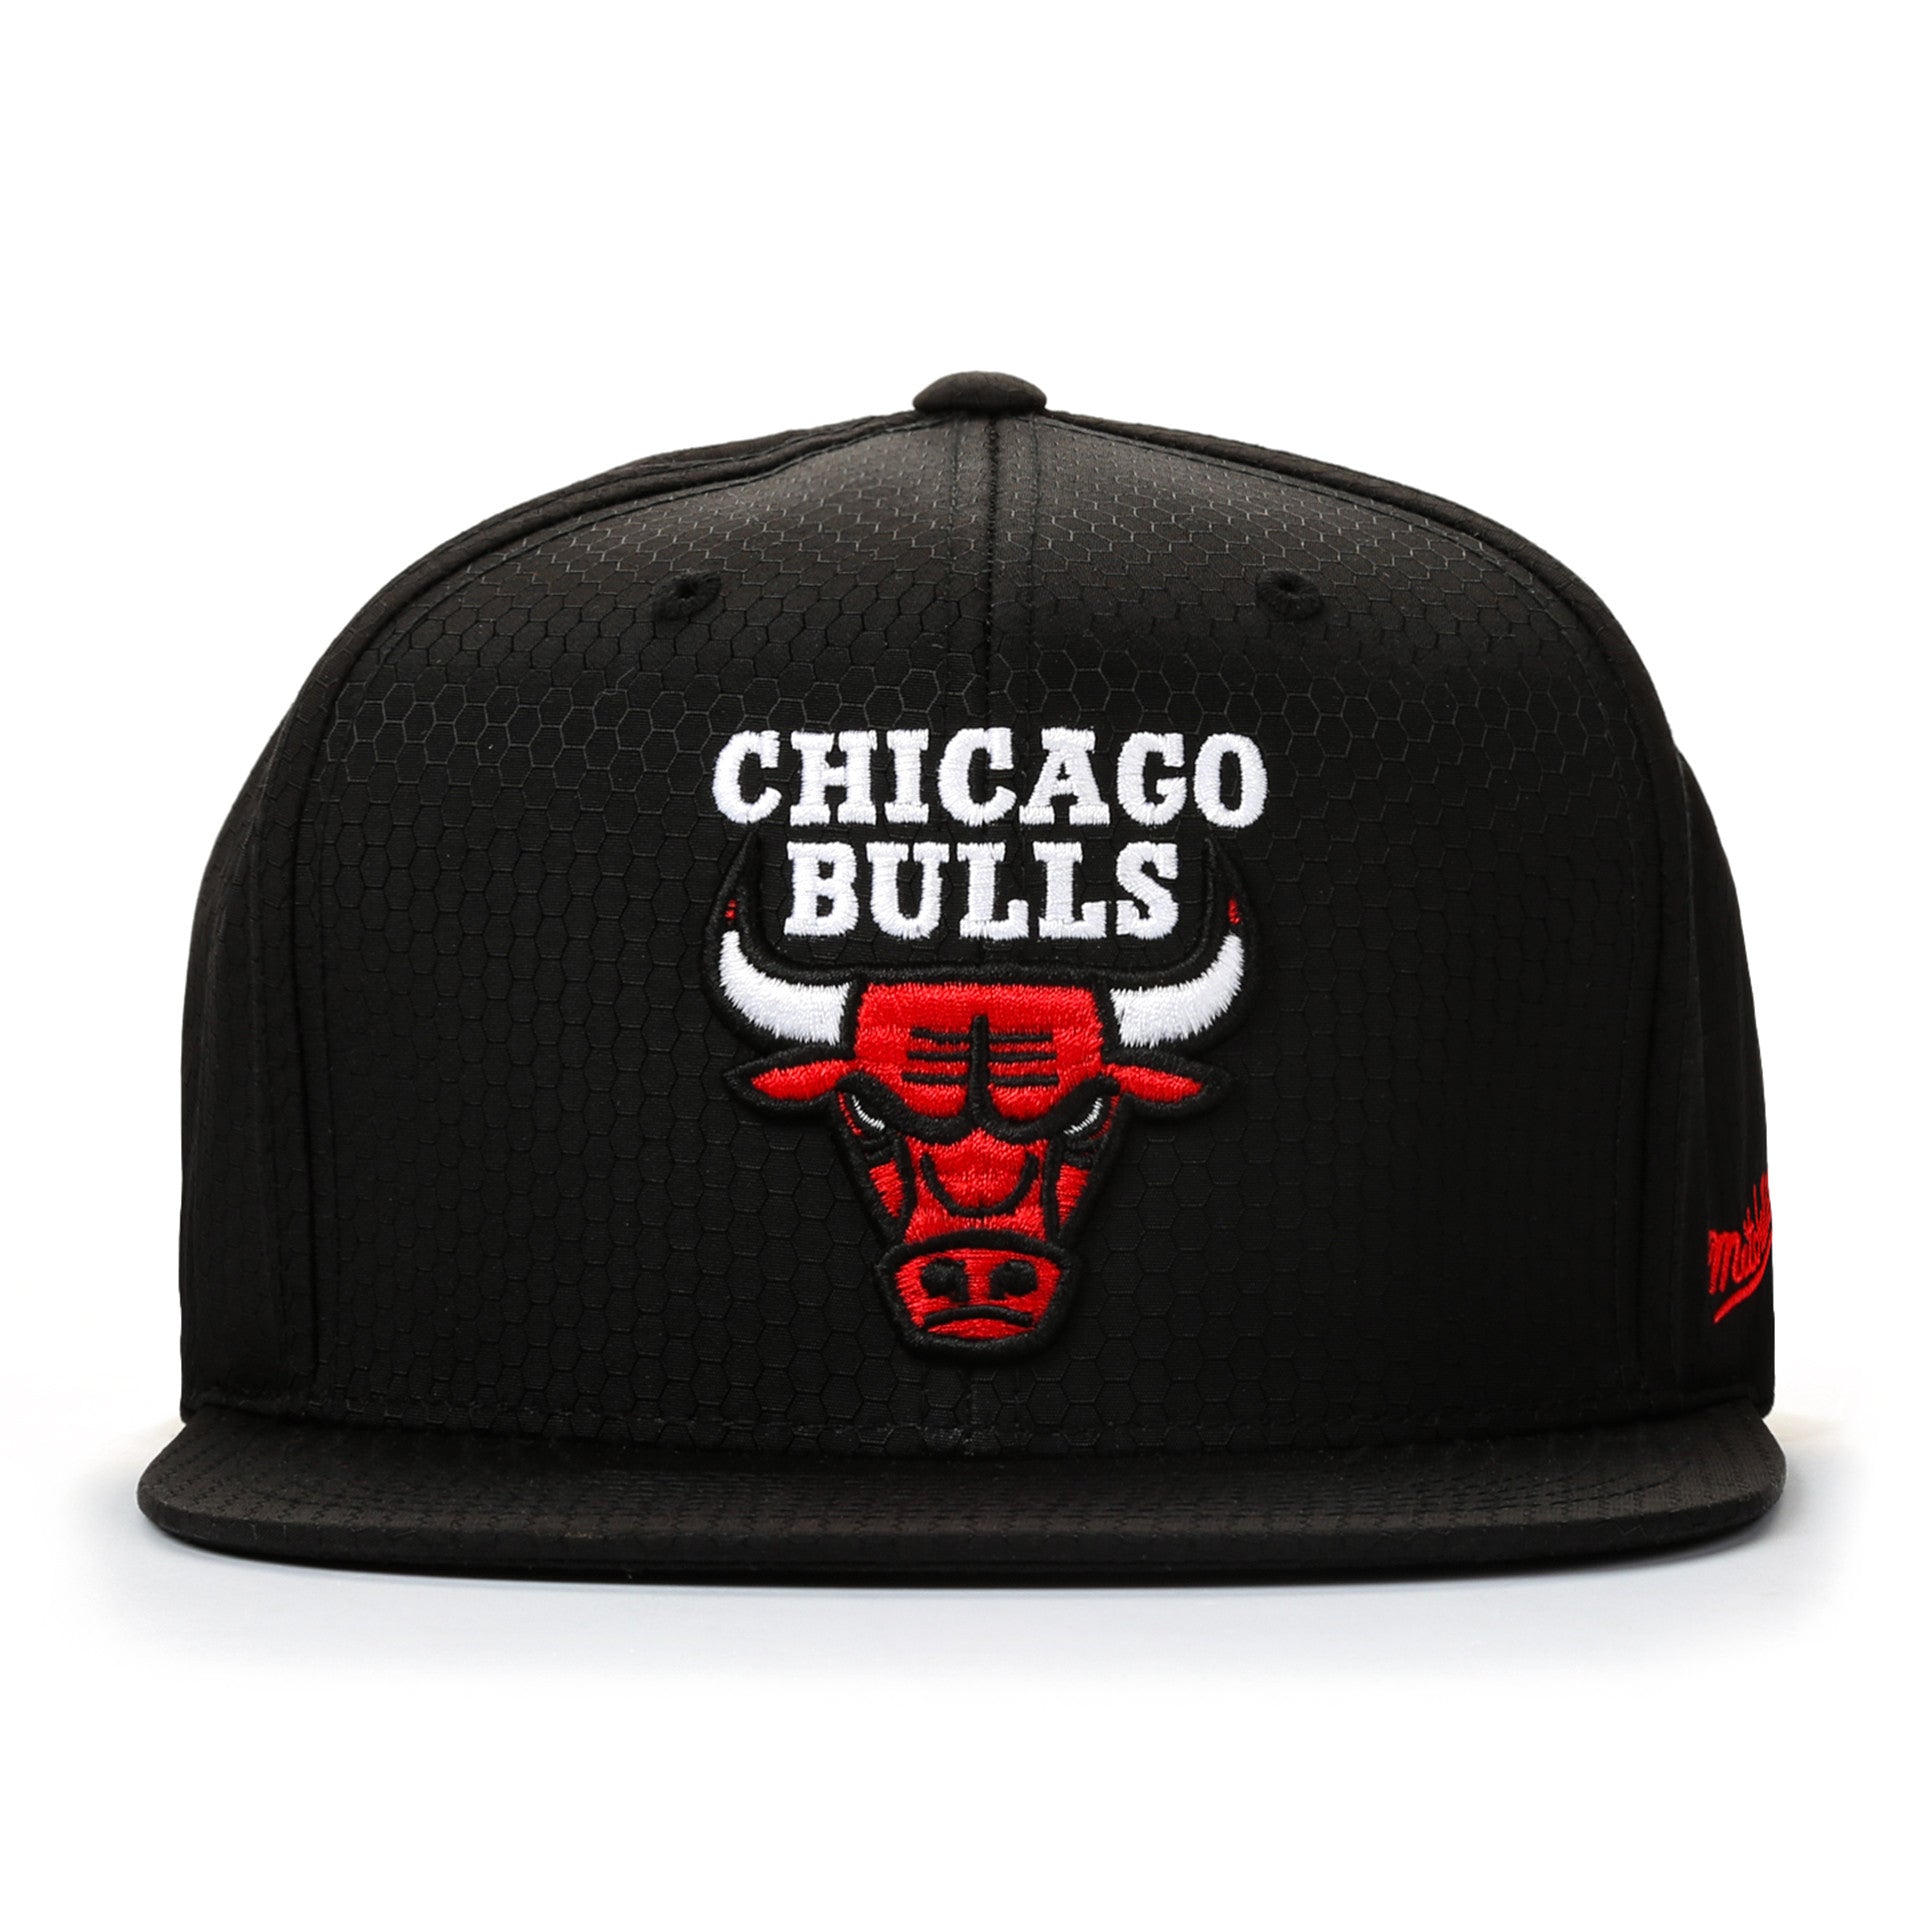 MITCHELL & NESS CHICAGO BULLS BASEBALL CAP